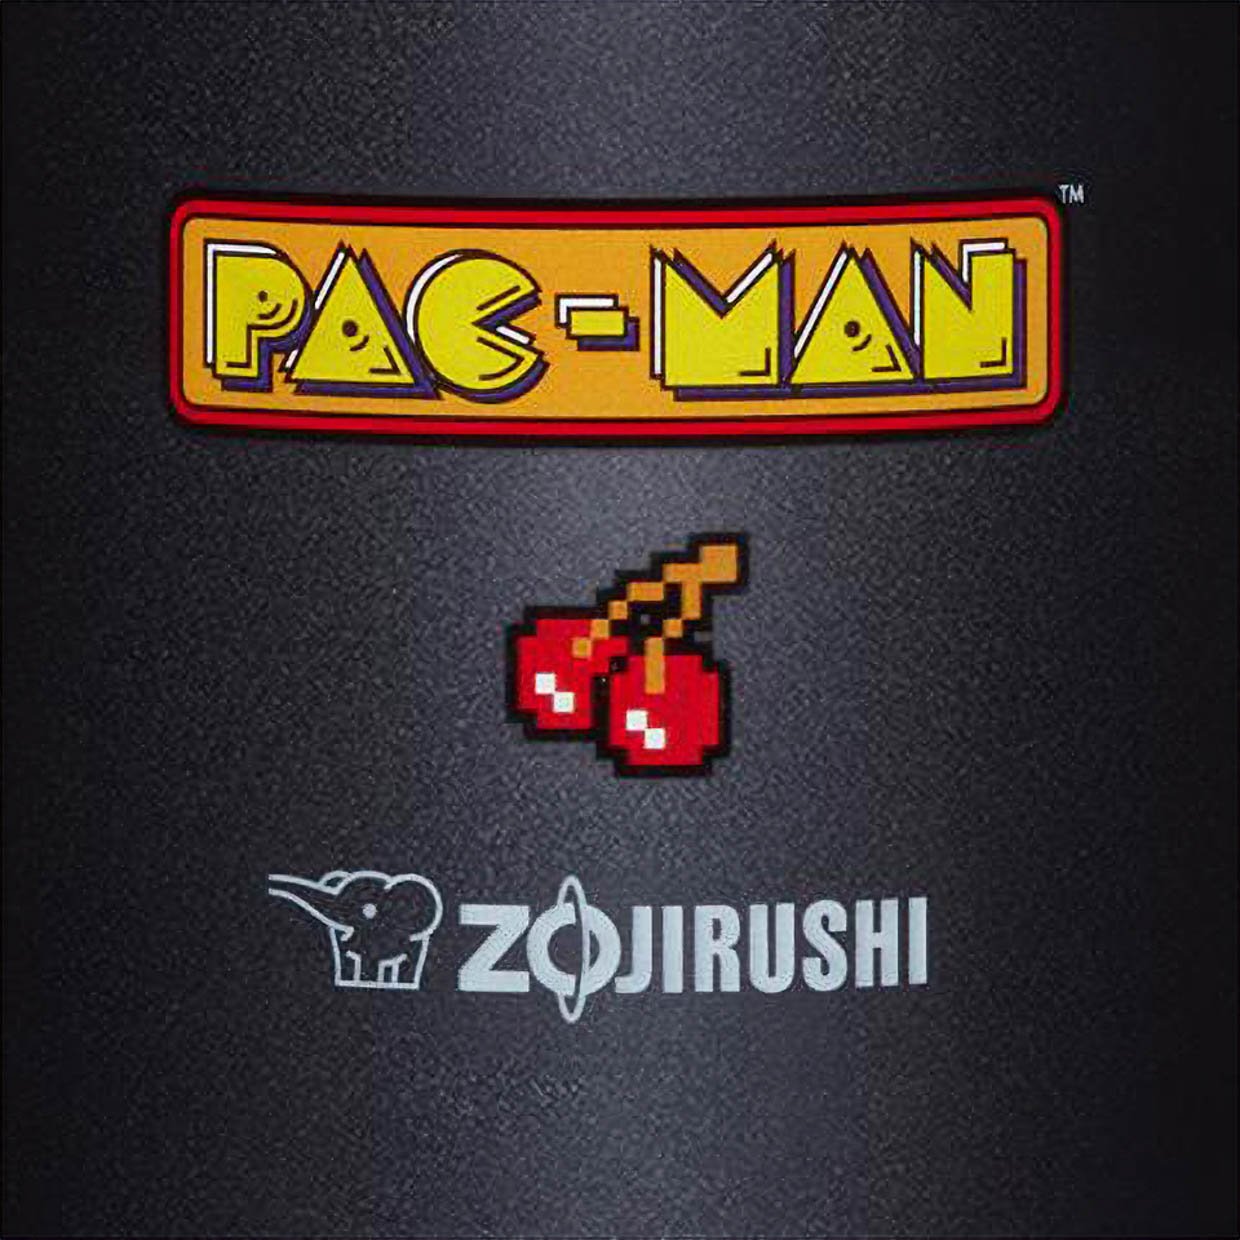 Zojirushi x PAC-MAN Insulated Mugs